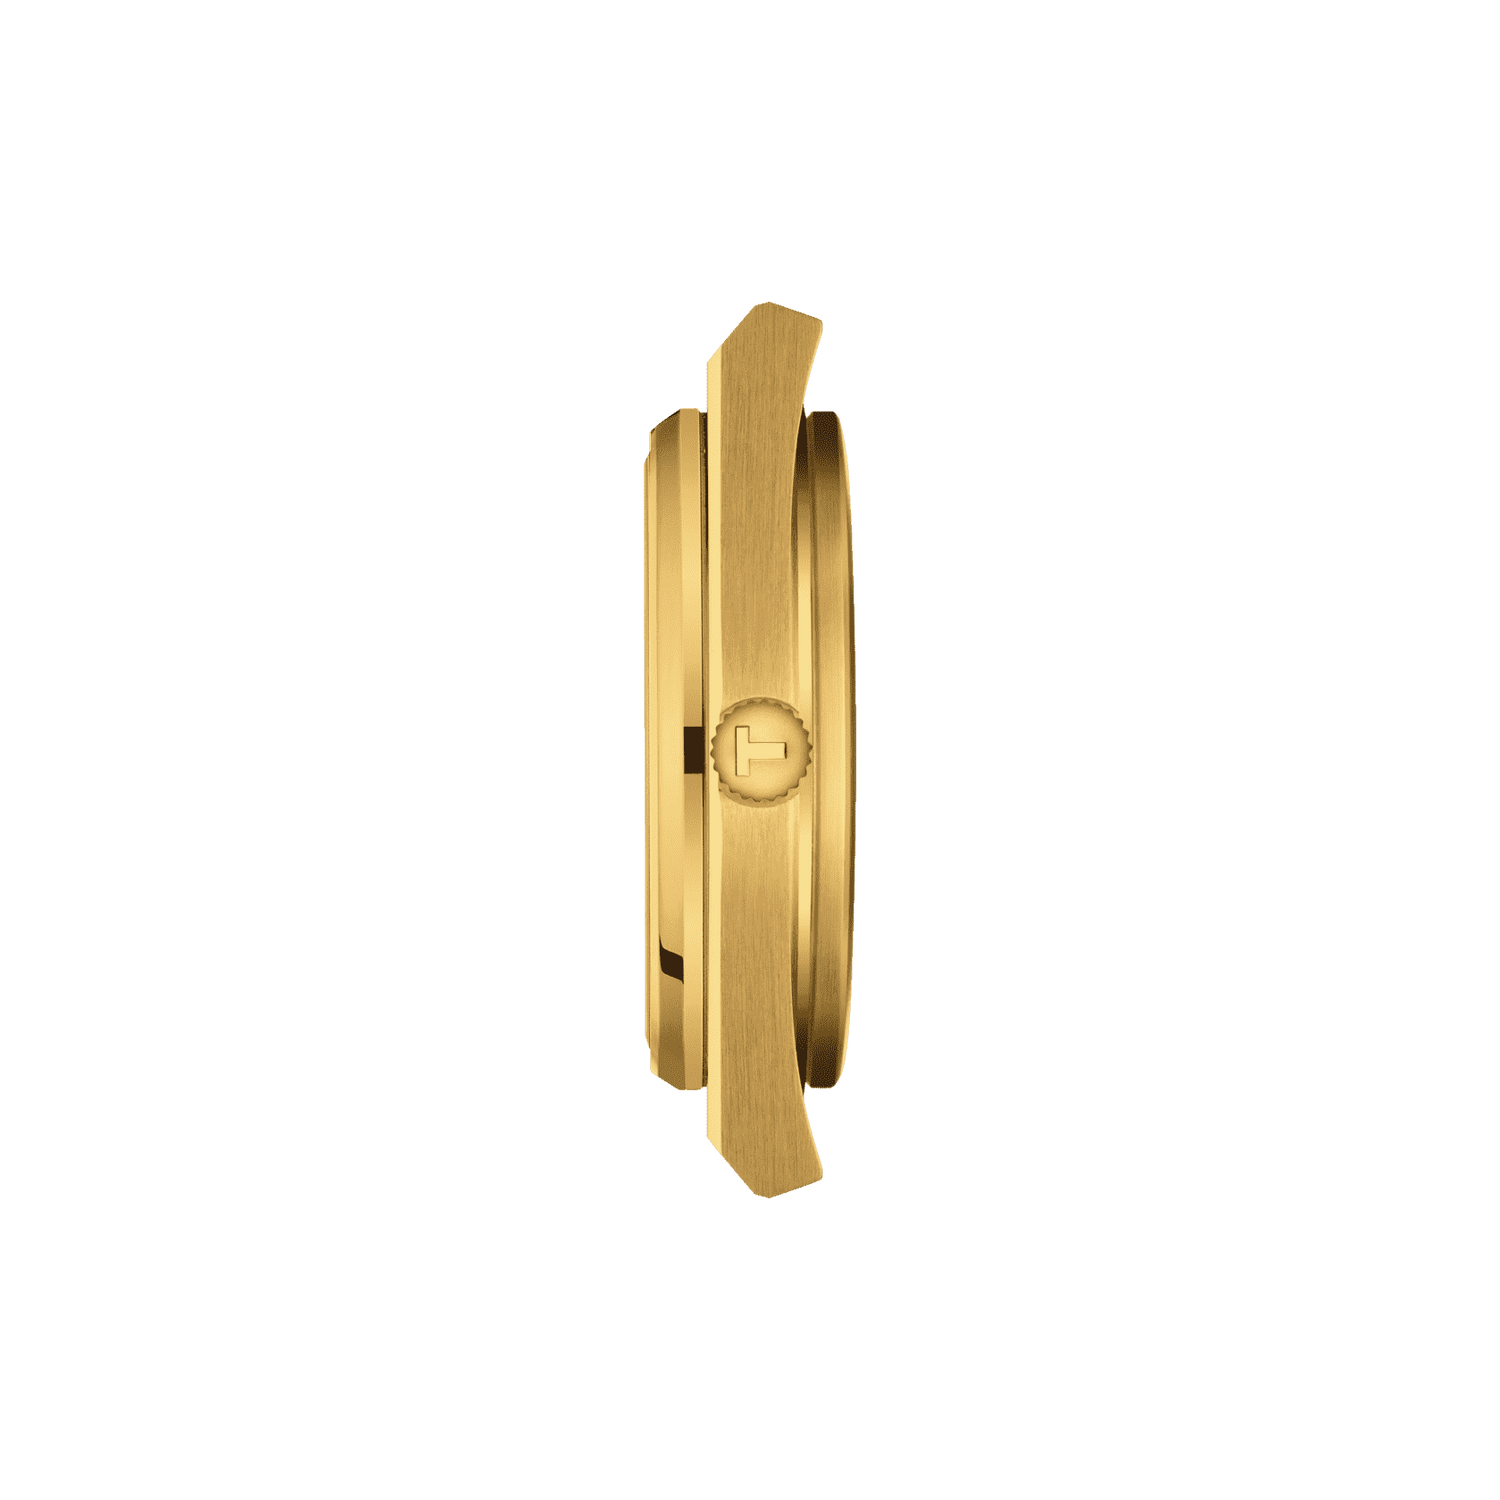 Tissot PRX Powermatic 80 Damian Lillard Special Edition - Brunott Juwelier